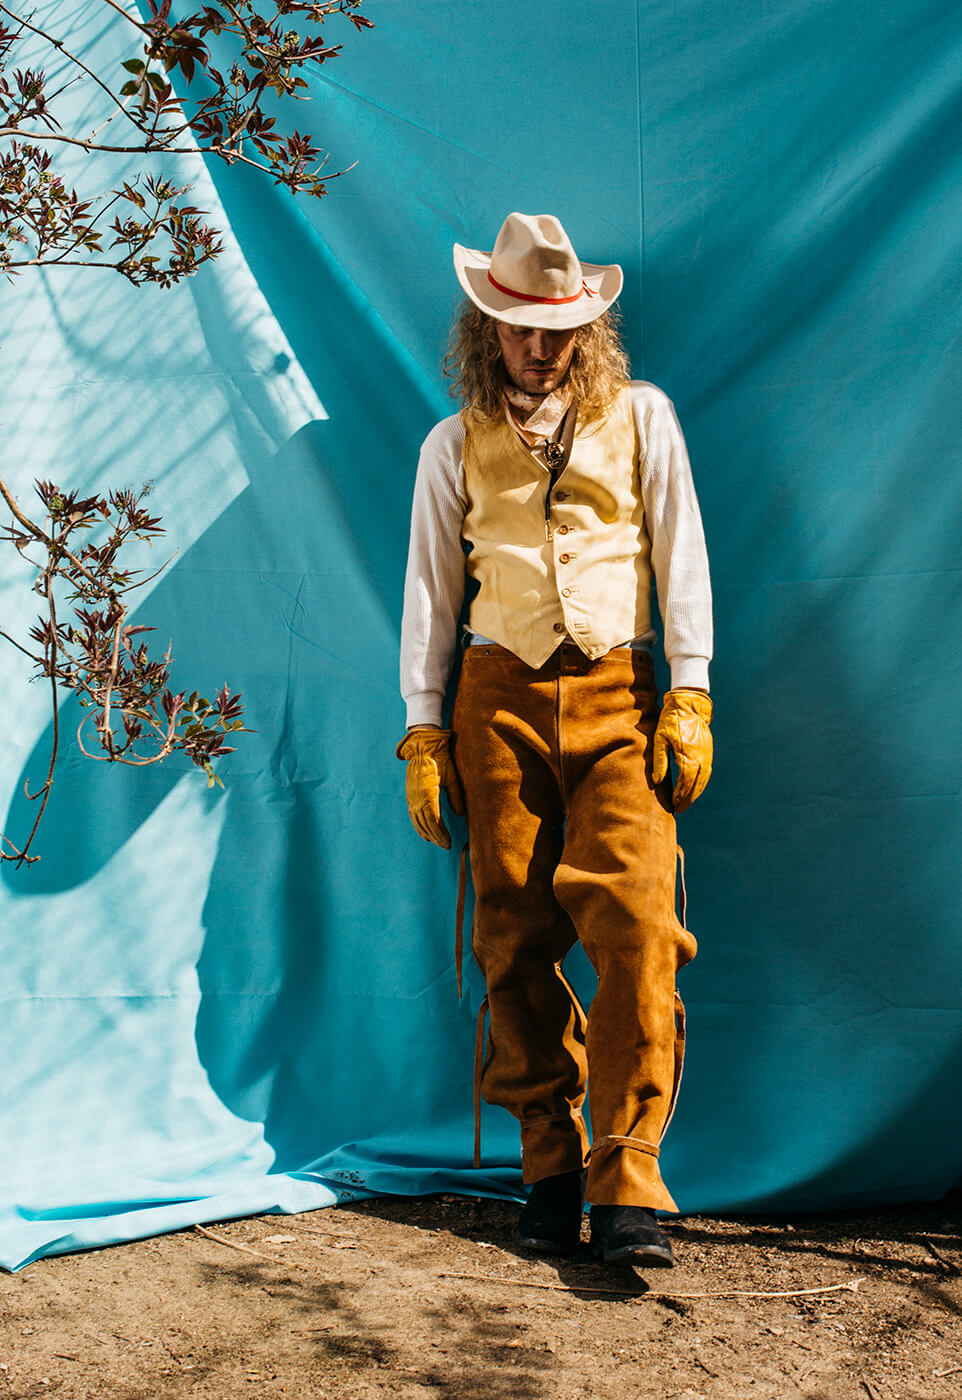 A portrait of a man wearing cowboy clothing